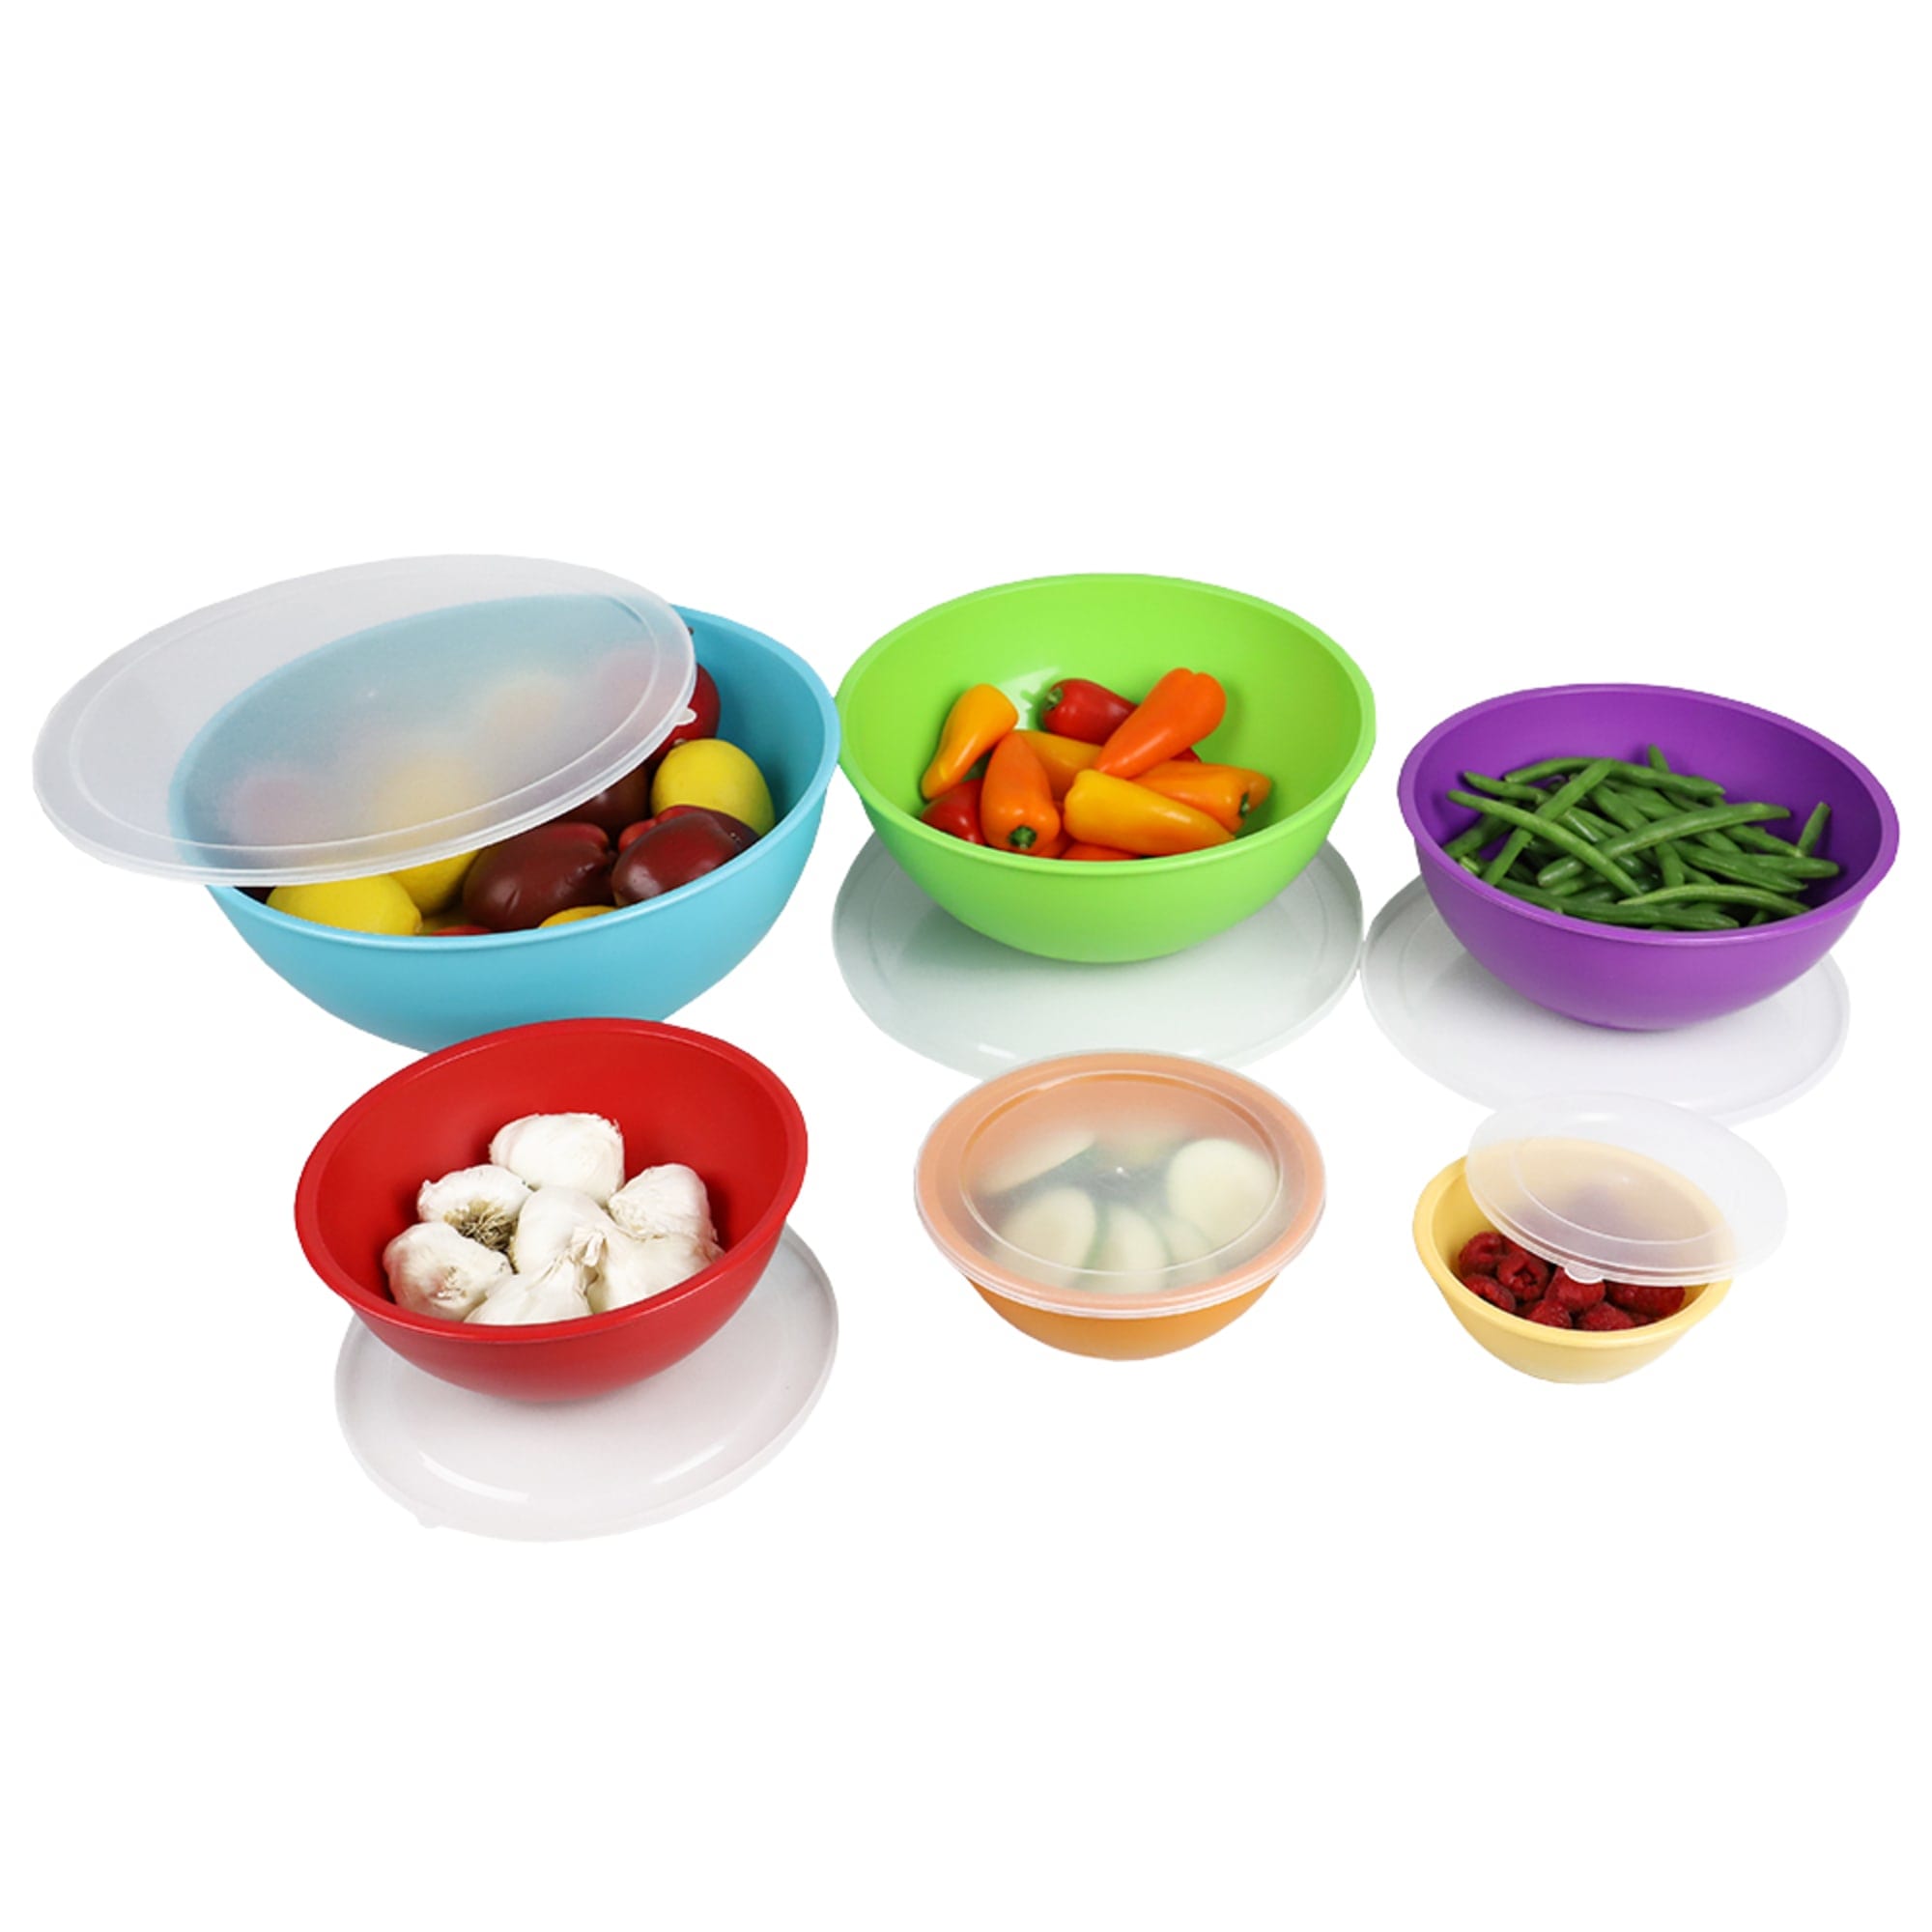 Home Basics Plastic 3 Piece Nesting Mixing Bowl Set with Lids, Multi, FOOD  PREP